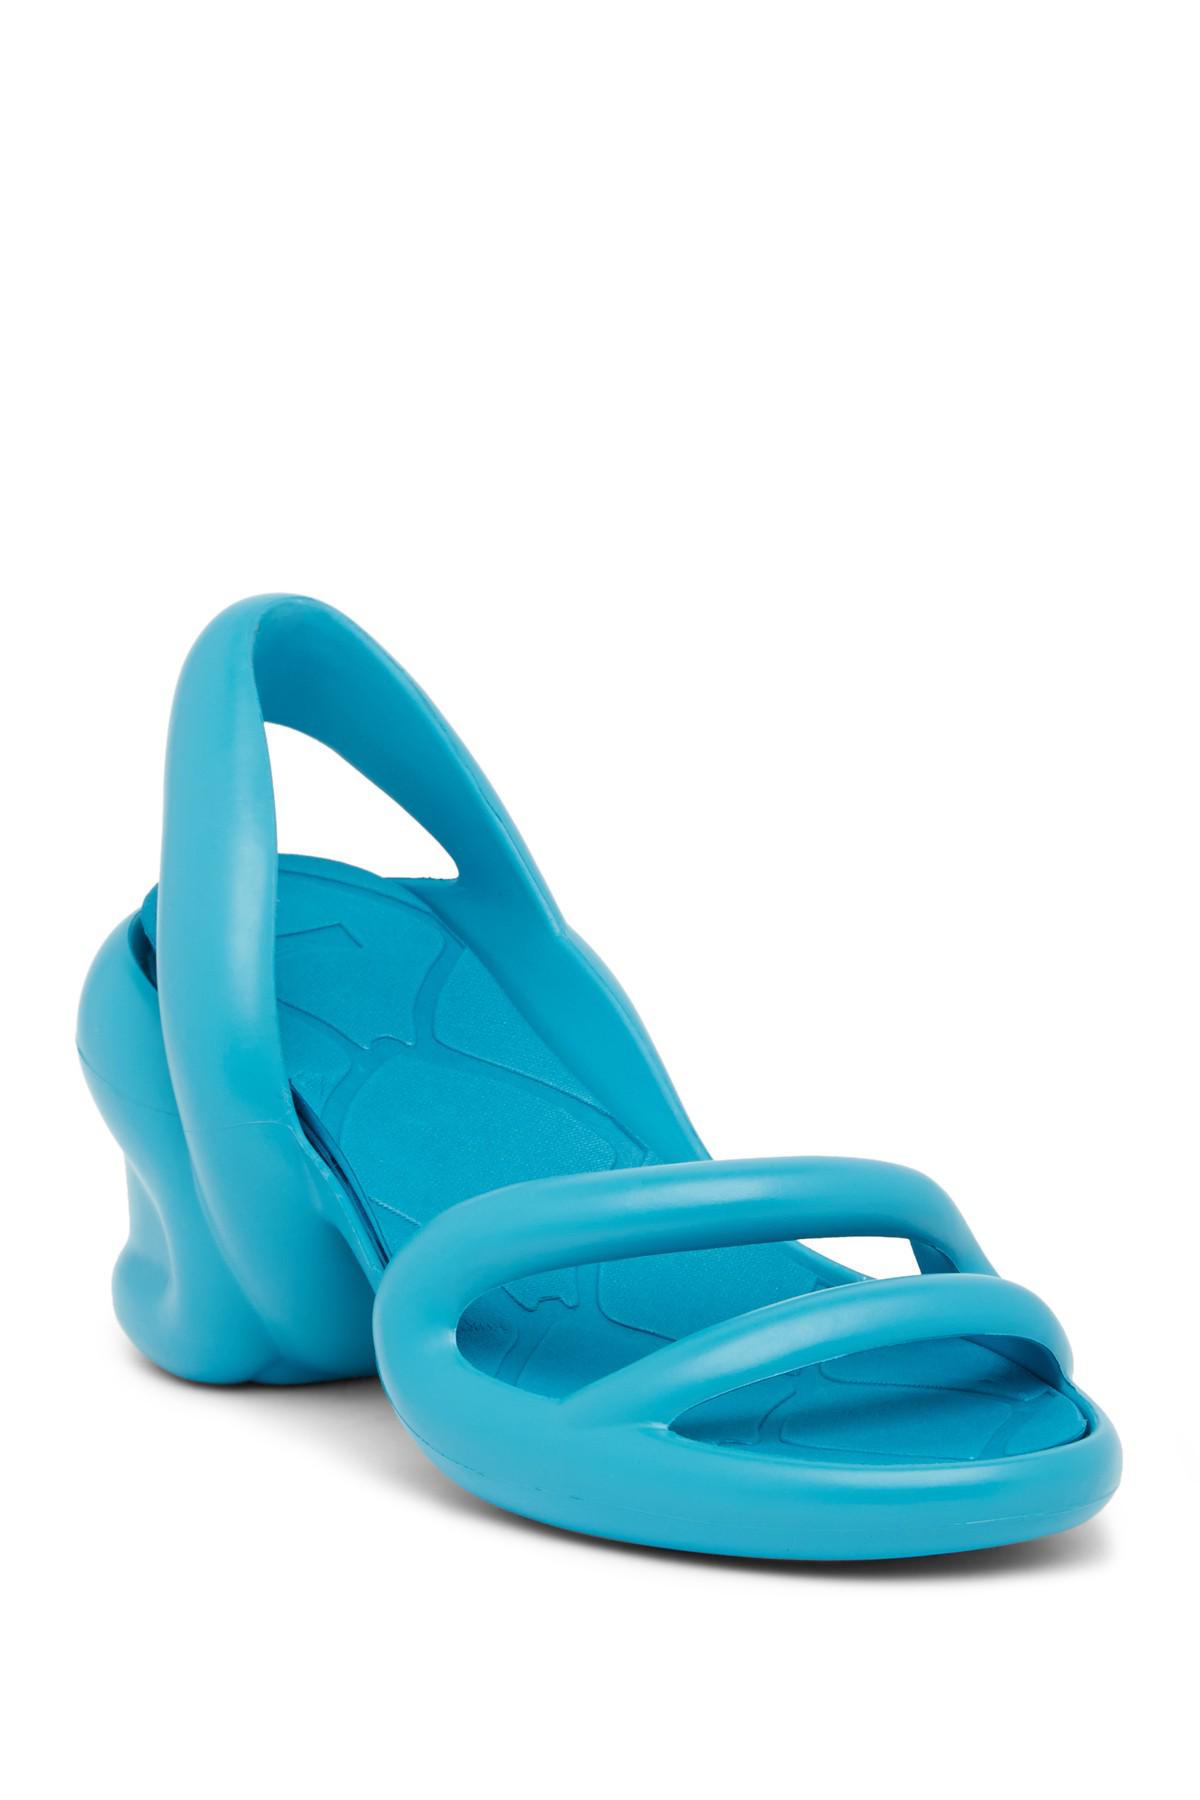 kobarah sandals